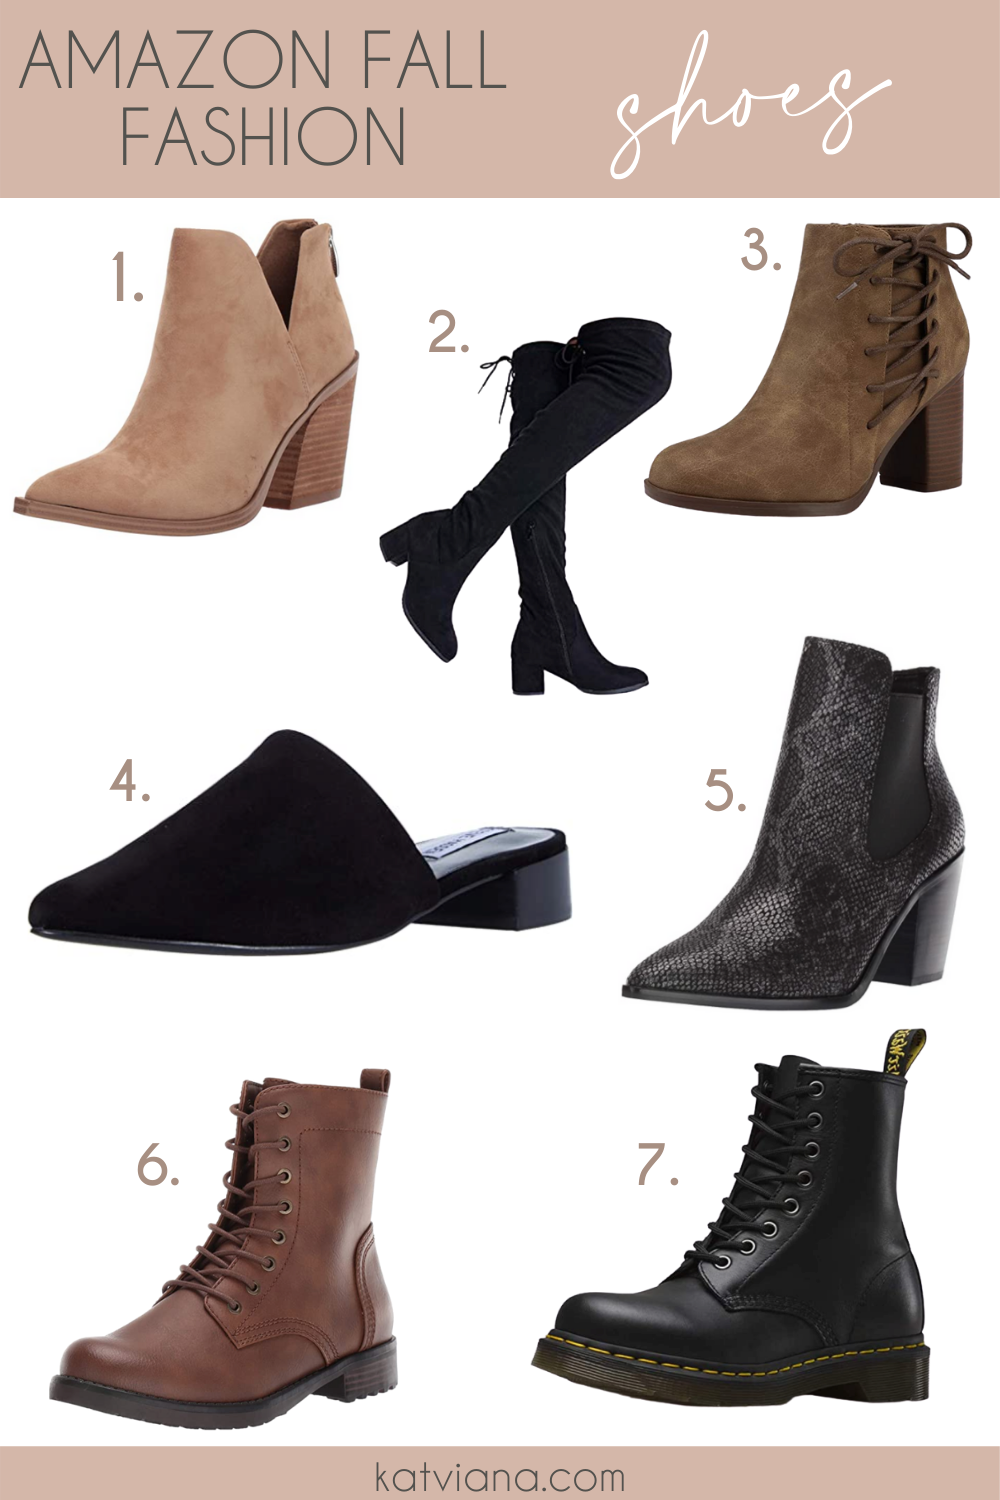 Amazon Fall Fashion - Shoes | Kat Viana